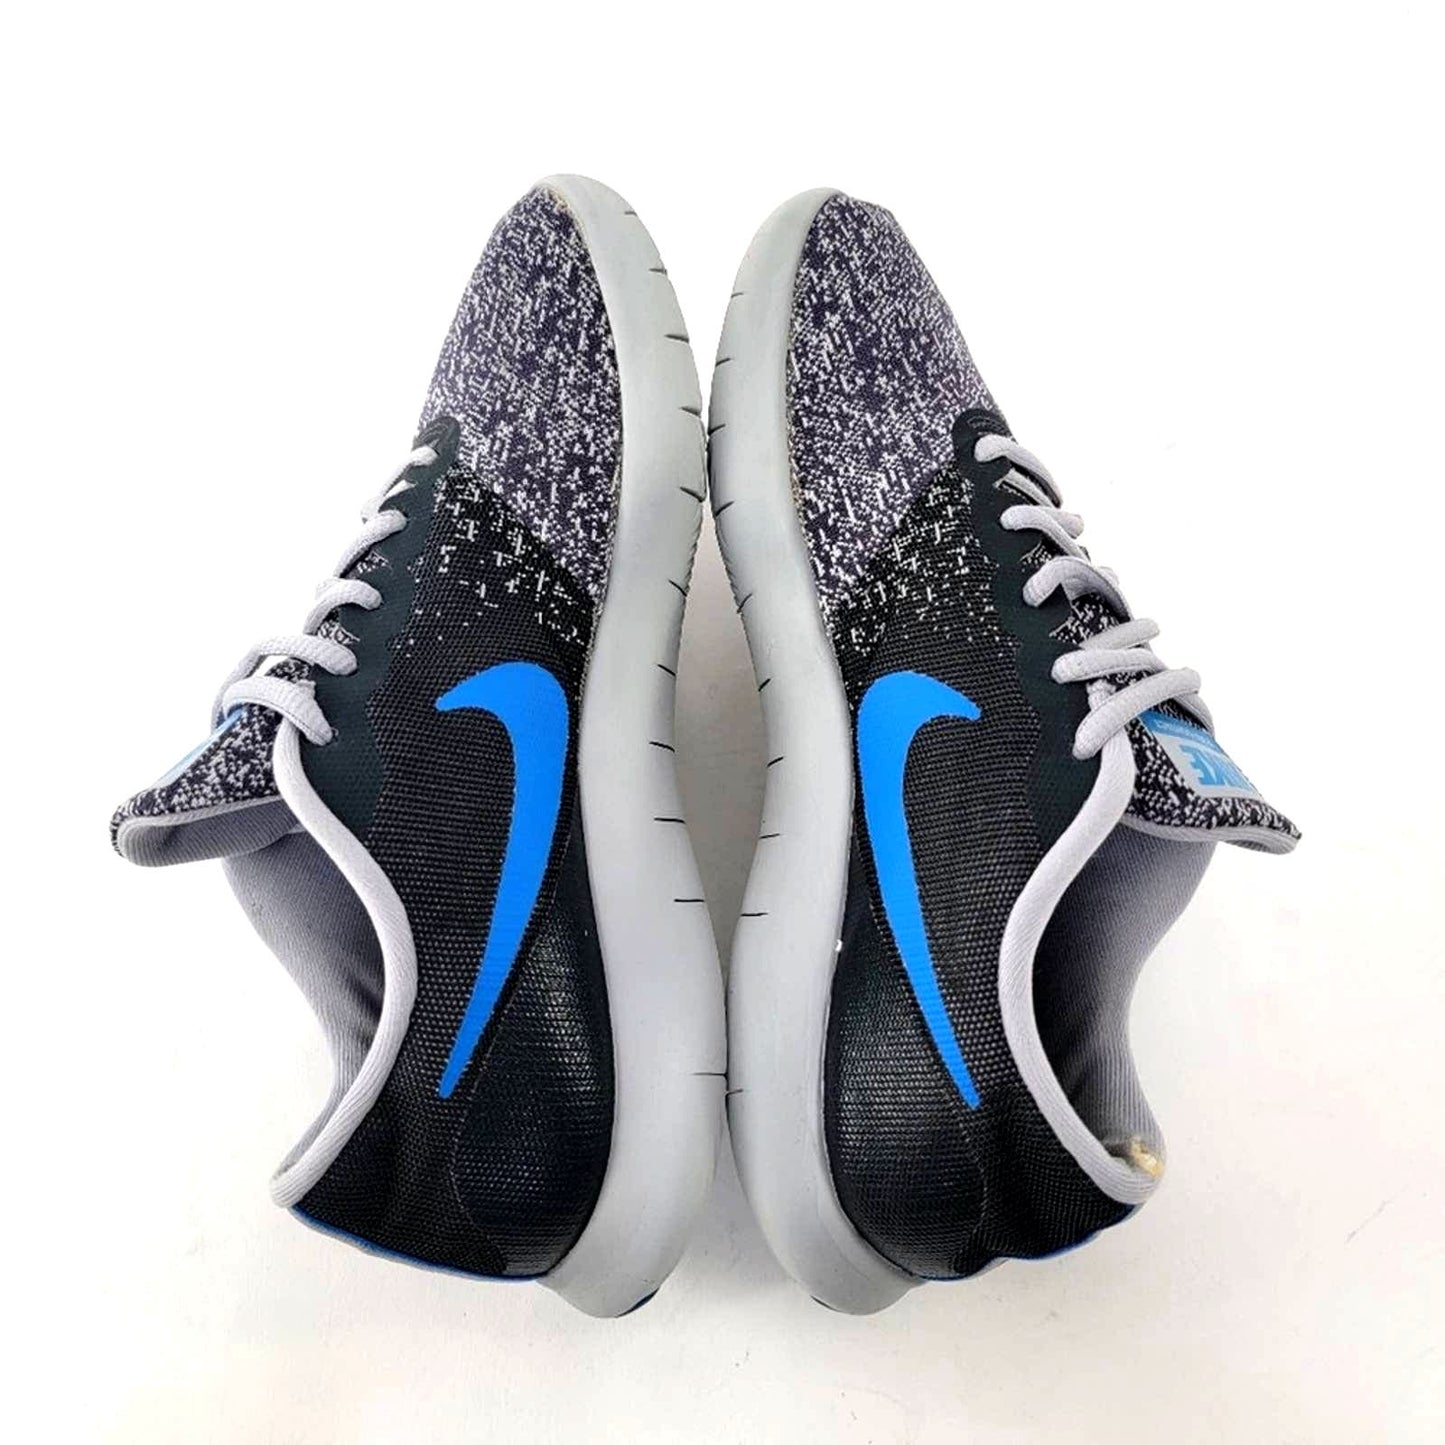 Nike Flex Contact Running Shoes - 8/9.5